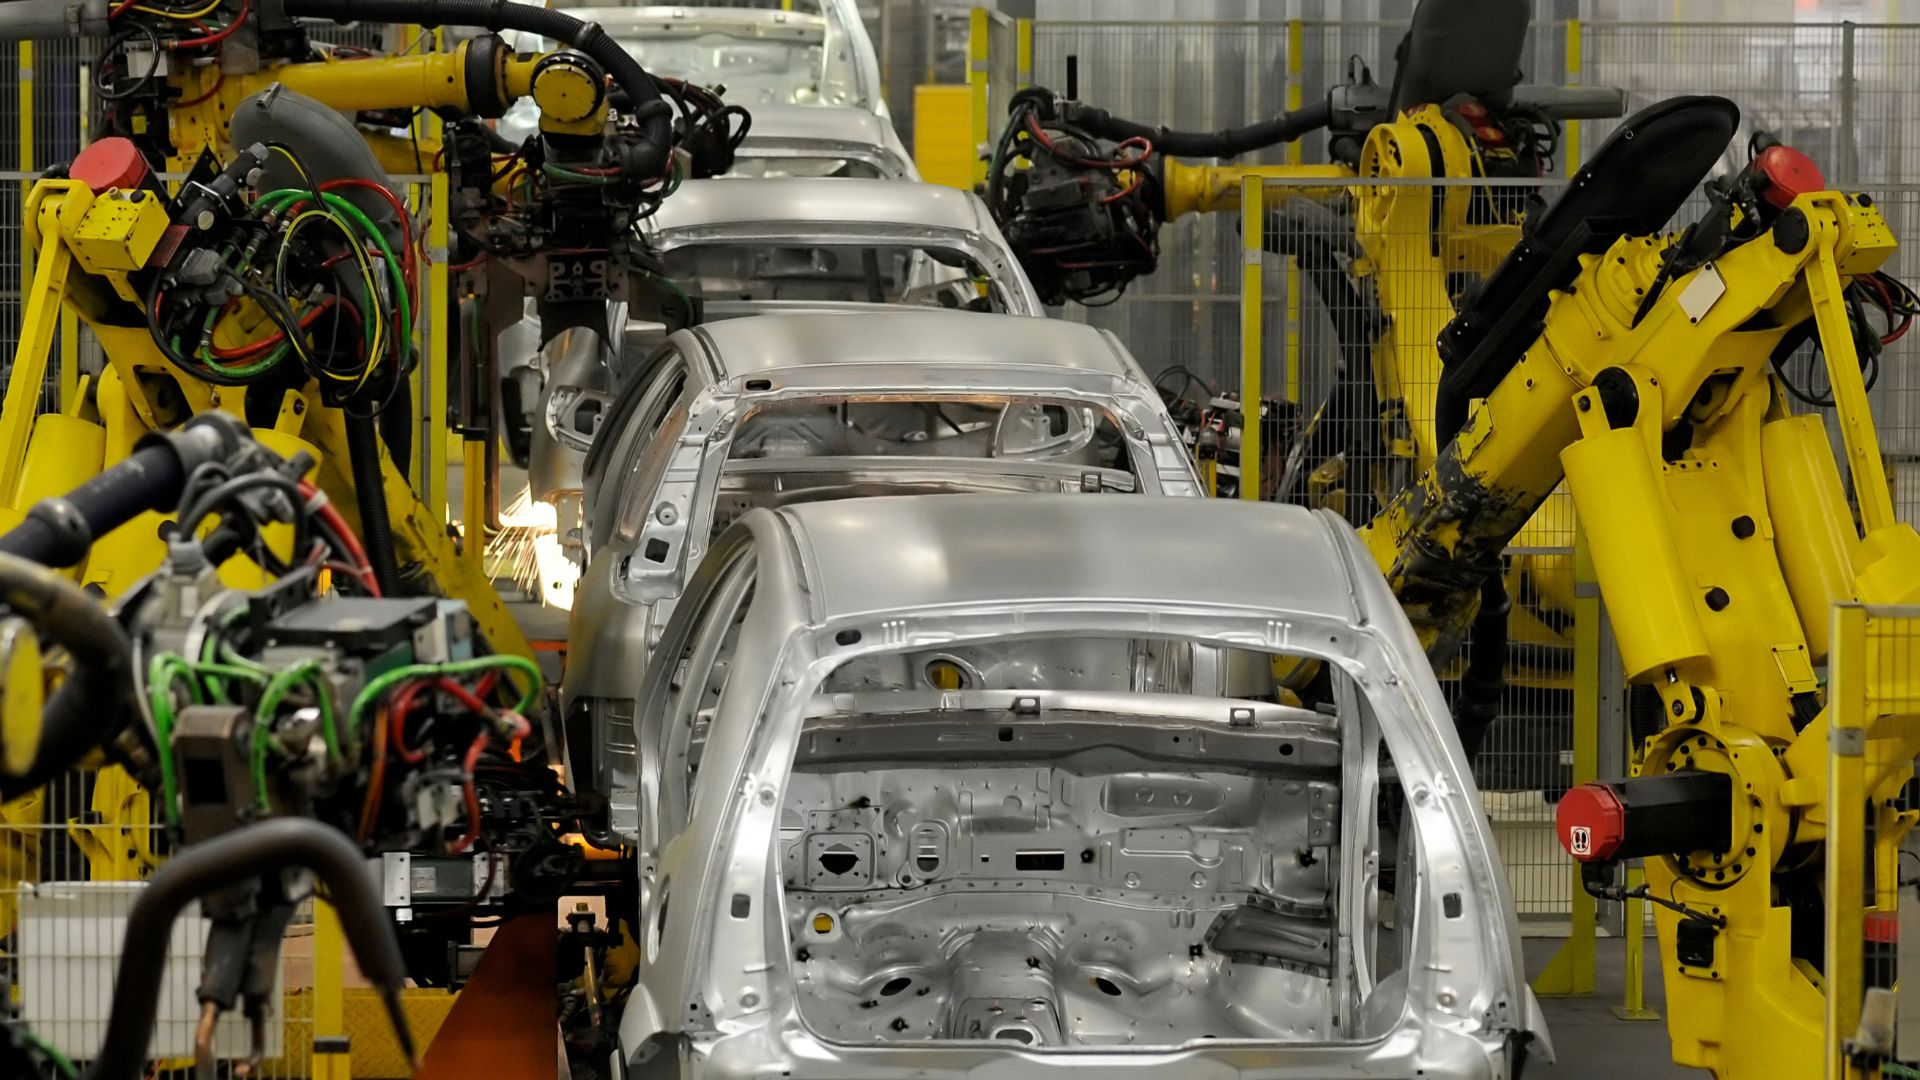 BMW ร่วมกับ Toyota เตรียมผลิตรถยนต์พลังงานไฮโดรเจนออกจำหน่ายครั้งแรกในปี 2568